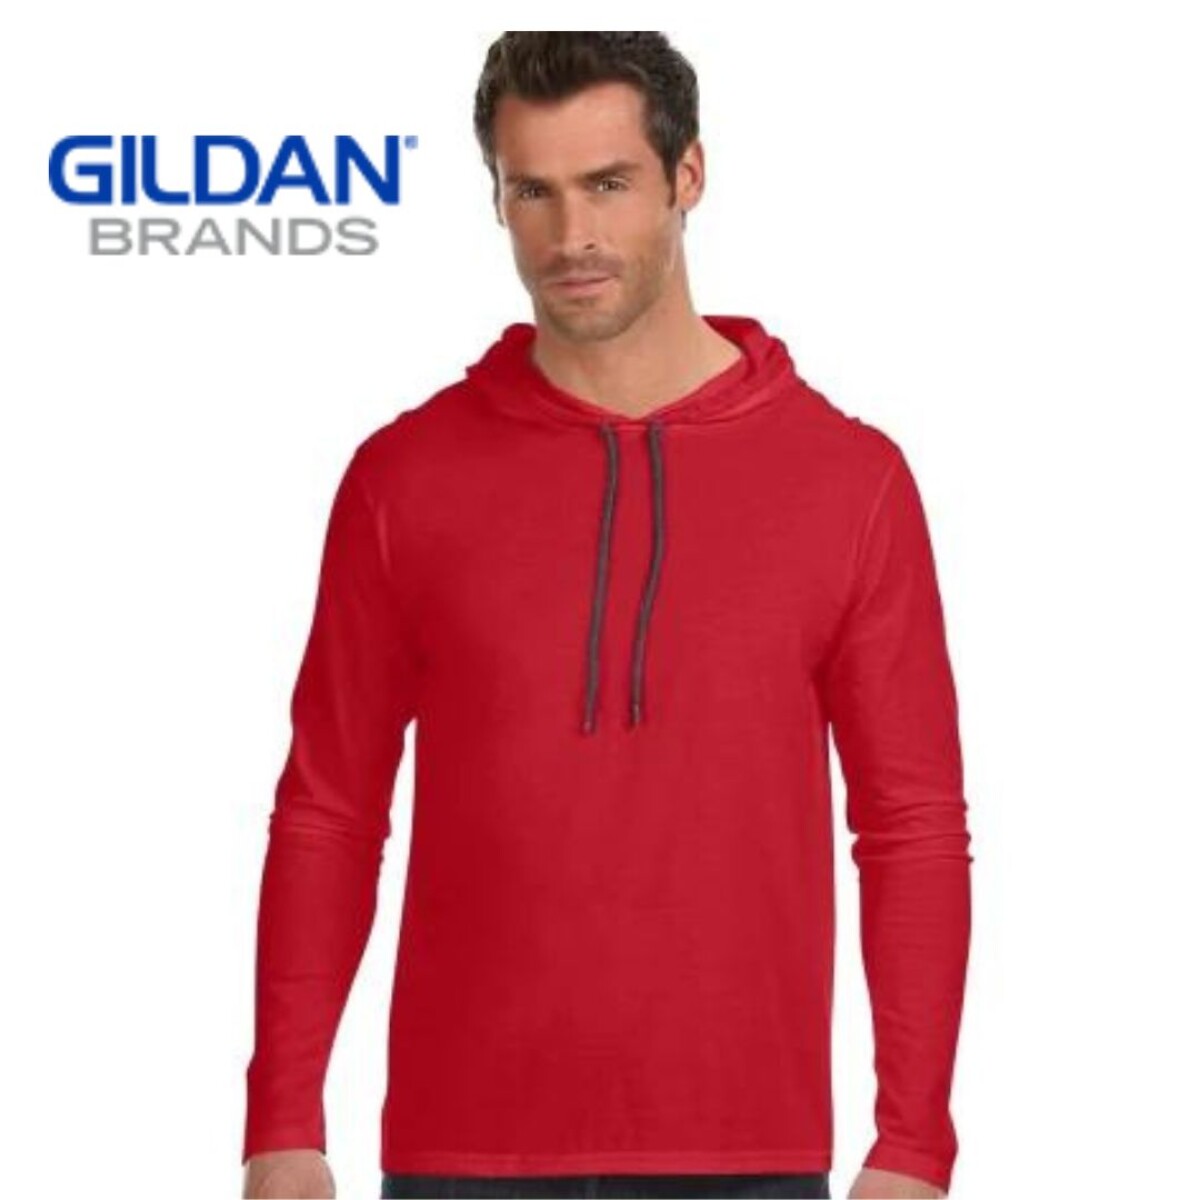 Canguro Gildan Unisex - Rojo 